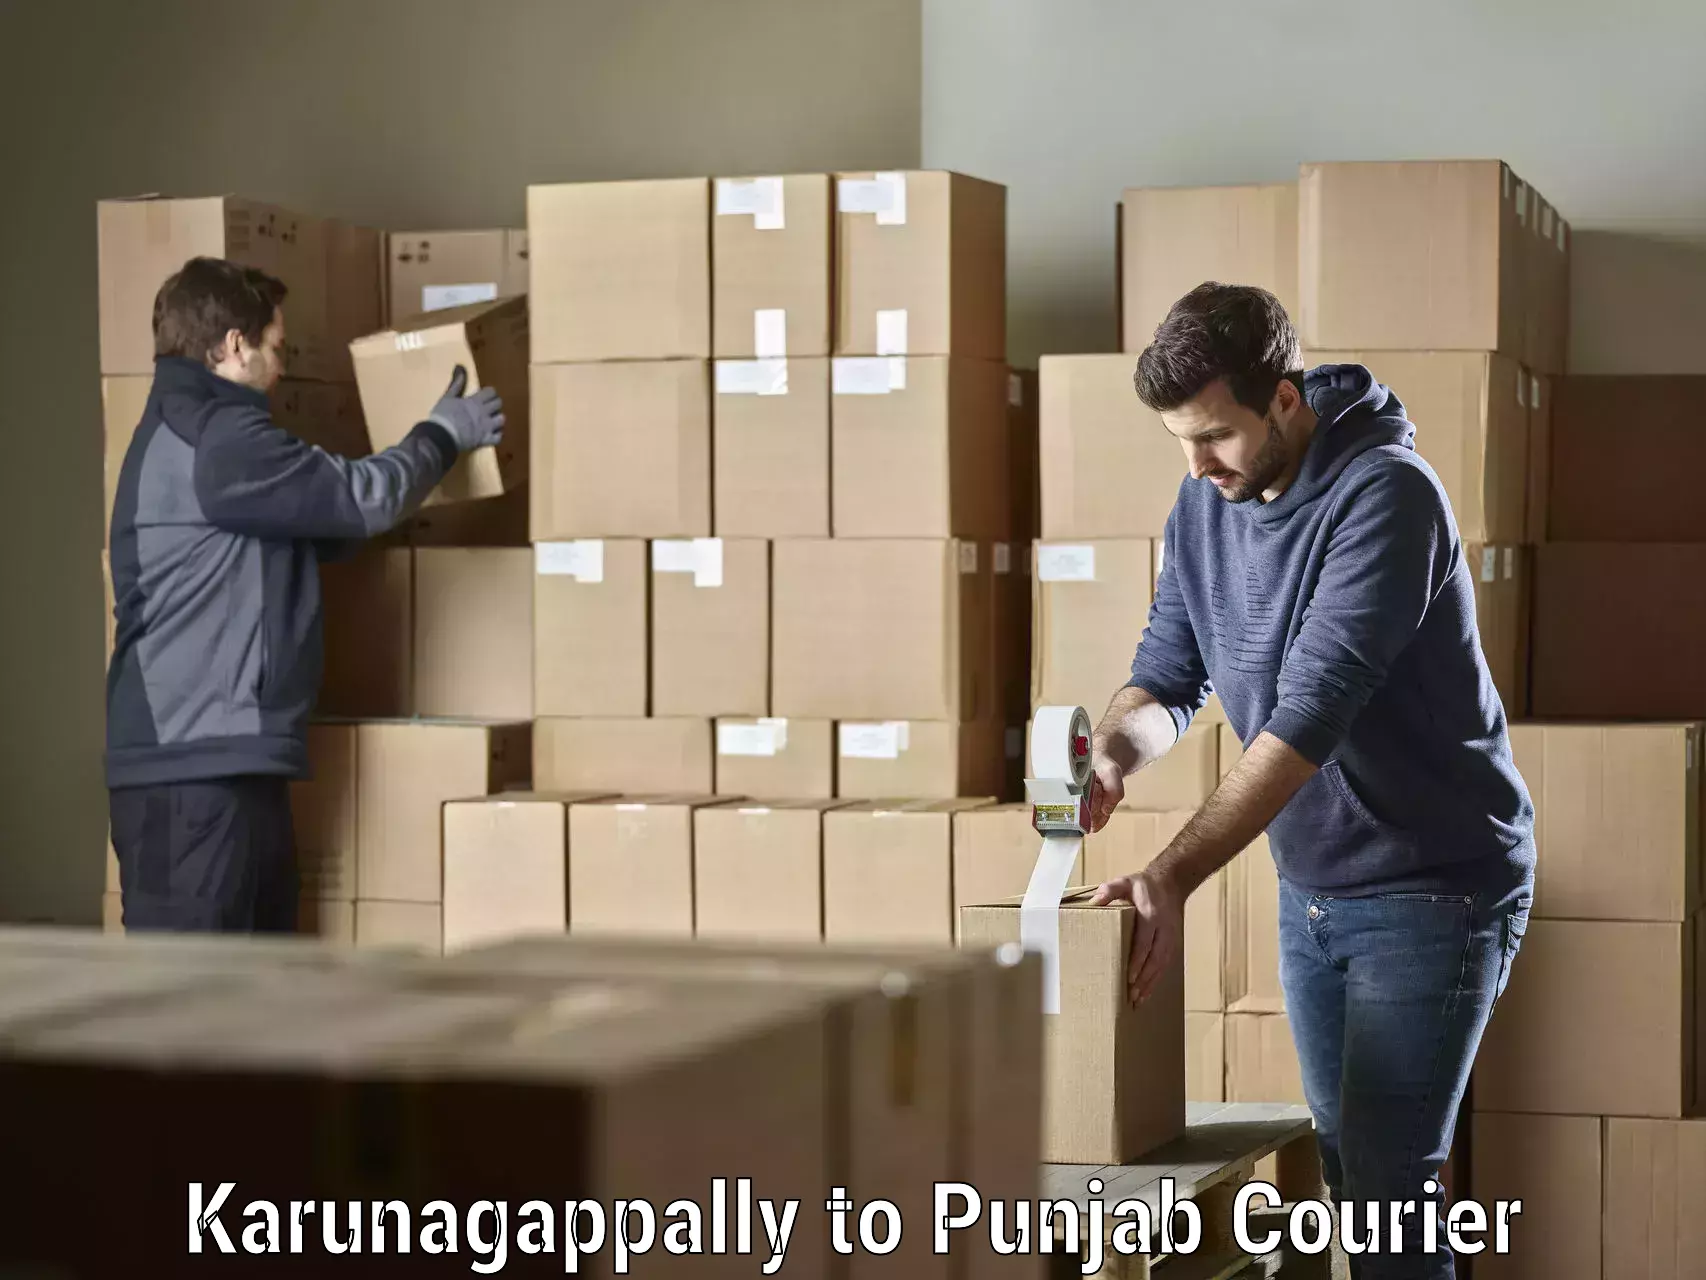 Courier service innovation Karunagappally to Jalandhar